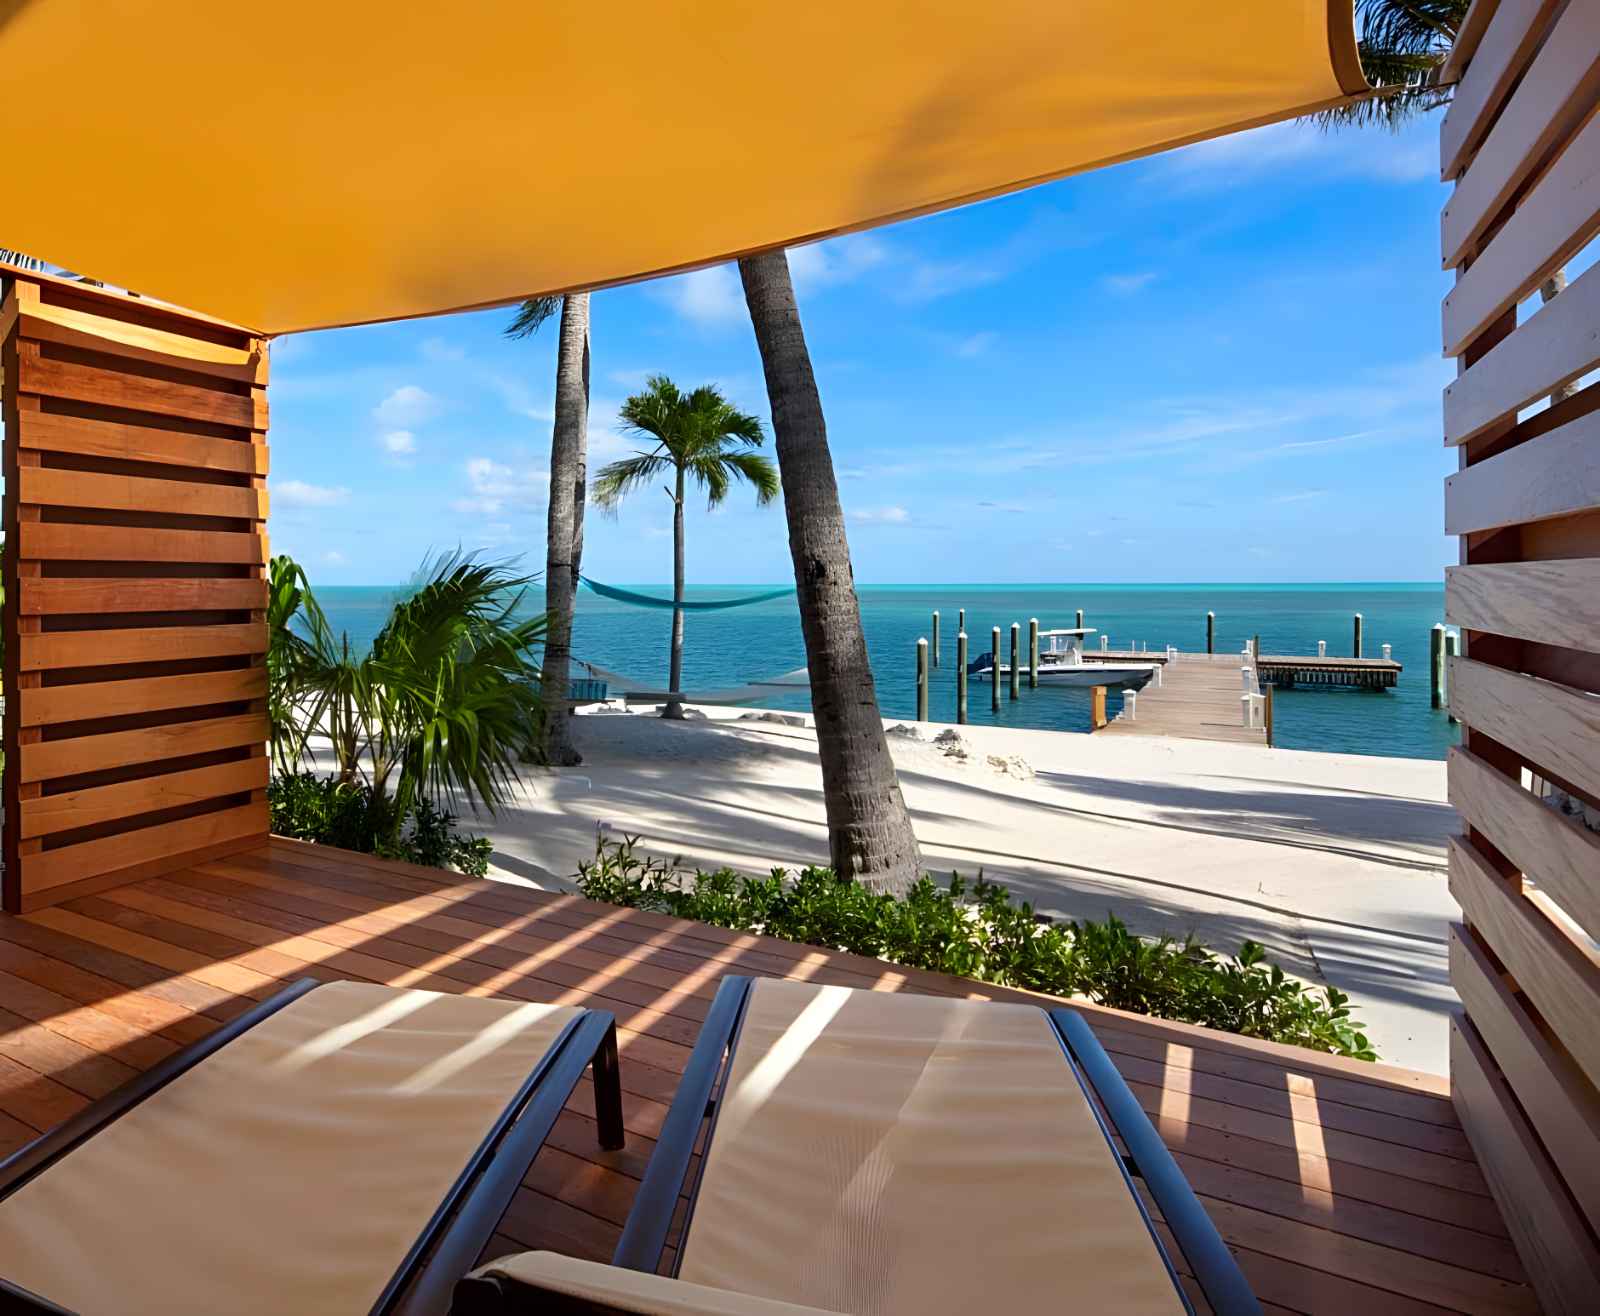 Best Beach Resorts in Florida Amara Cay Resort